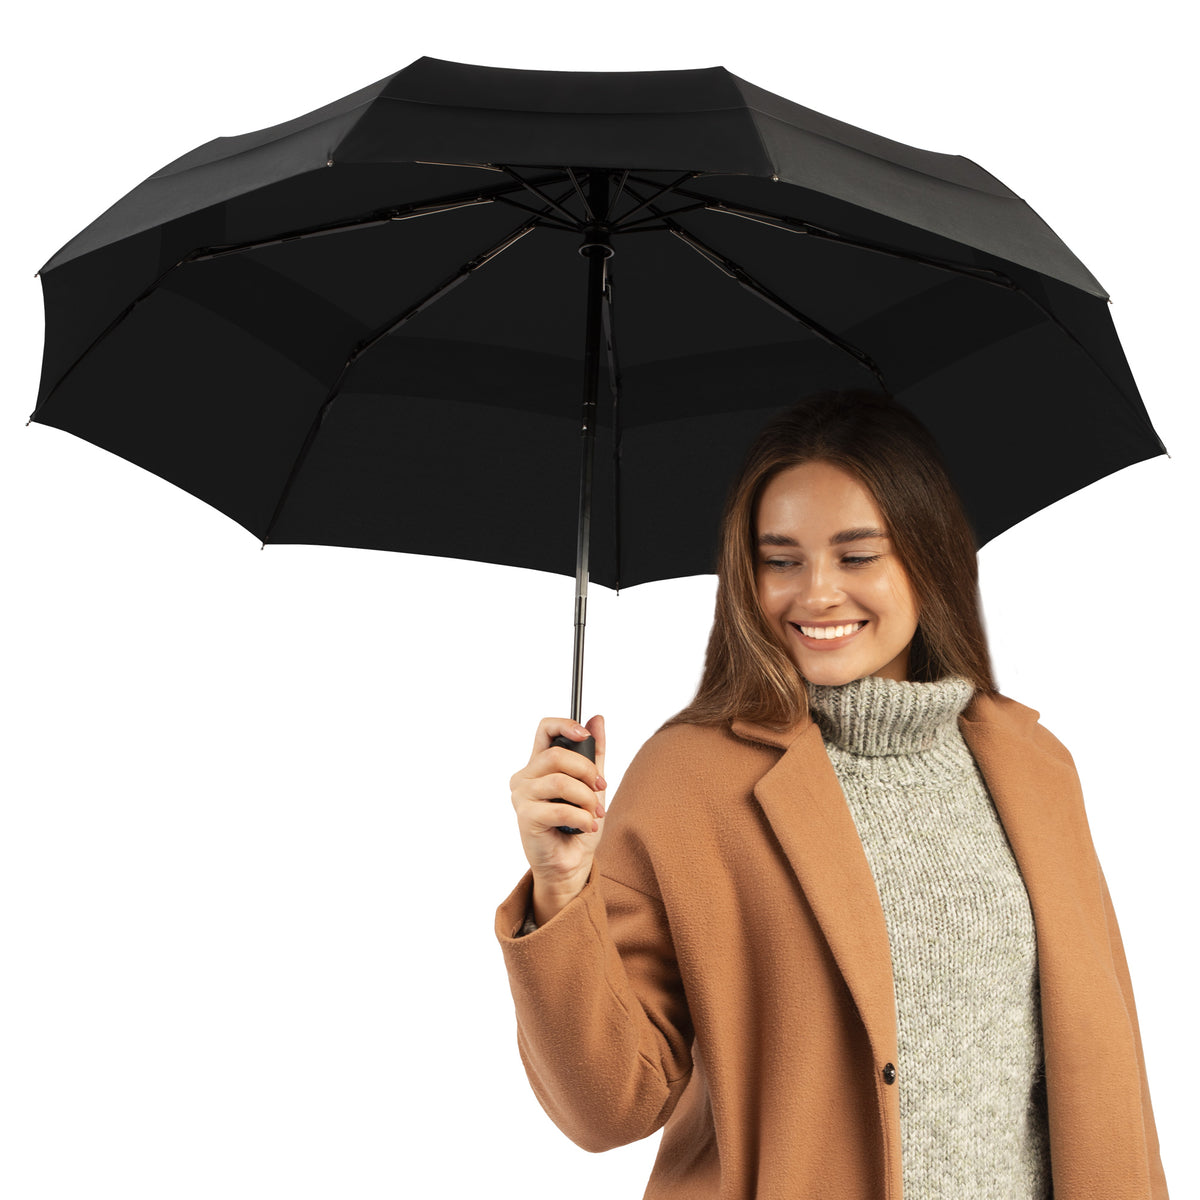 Windproof Travel Umbrella - Compact, Durable, Automatic